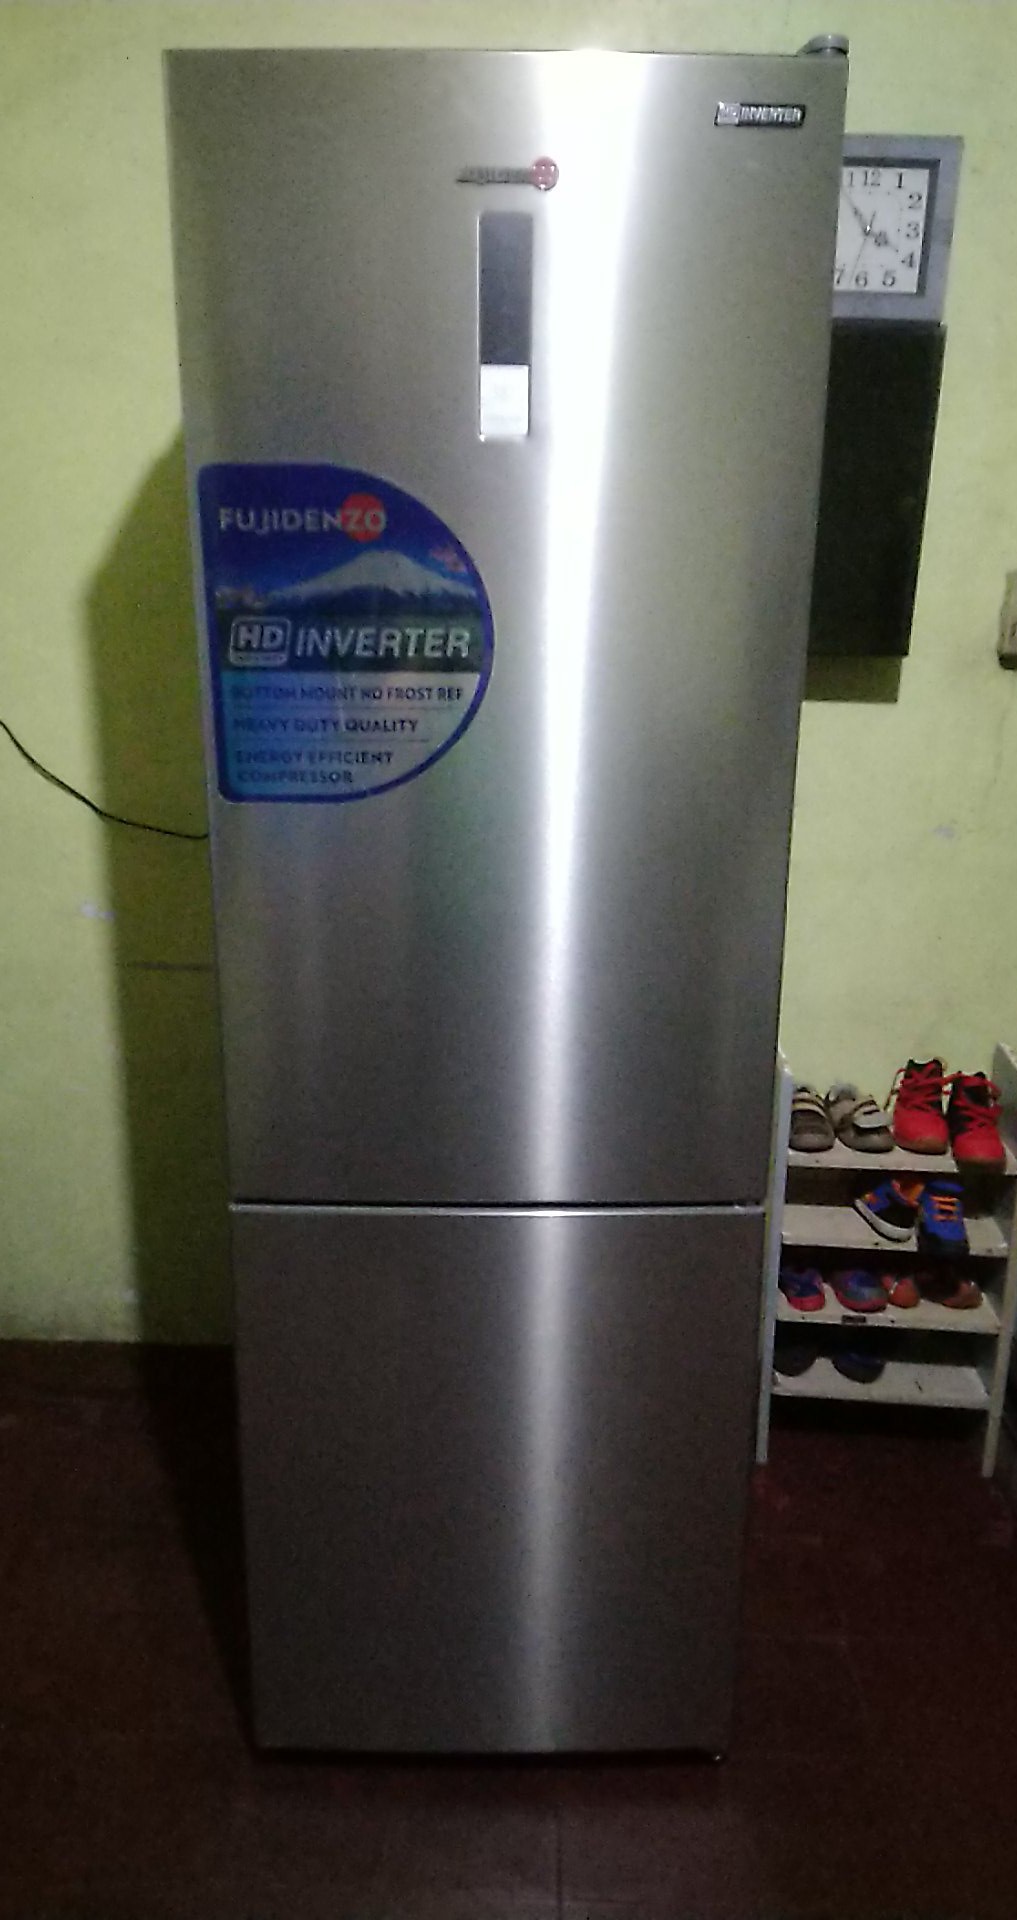 Fujidenzo 12 cu. ft. HD Inverter Bottom Mount No Frost Refrigerator IBM ...